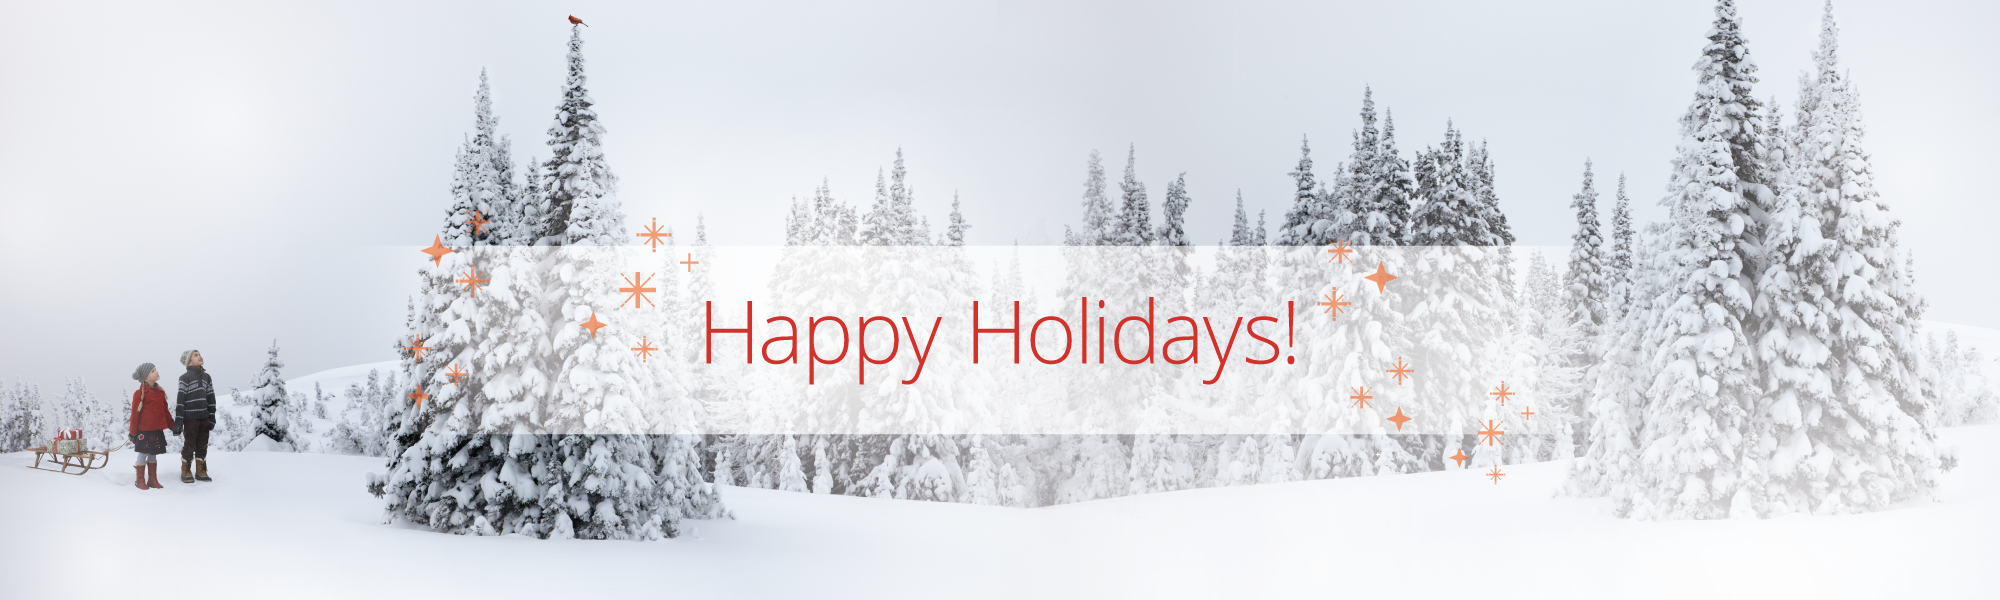 Blackfoot Communications: Happy Holidays!